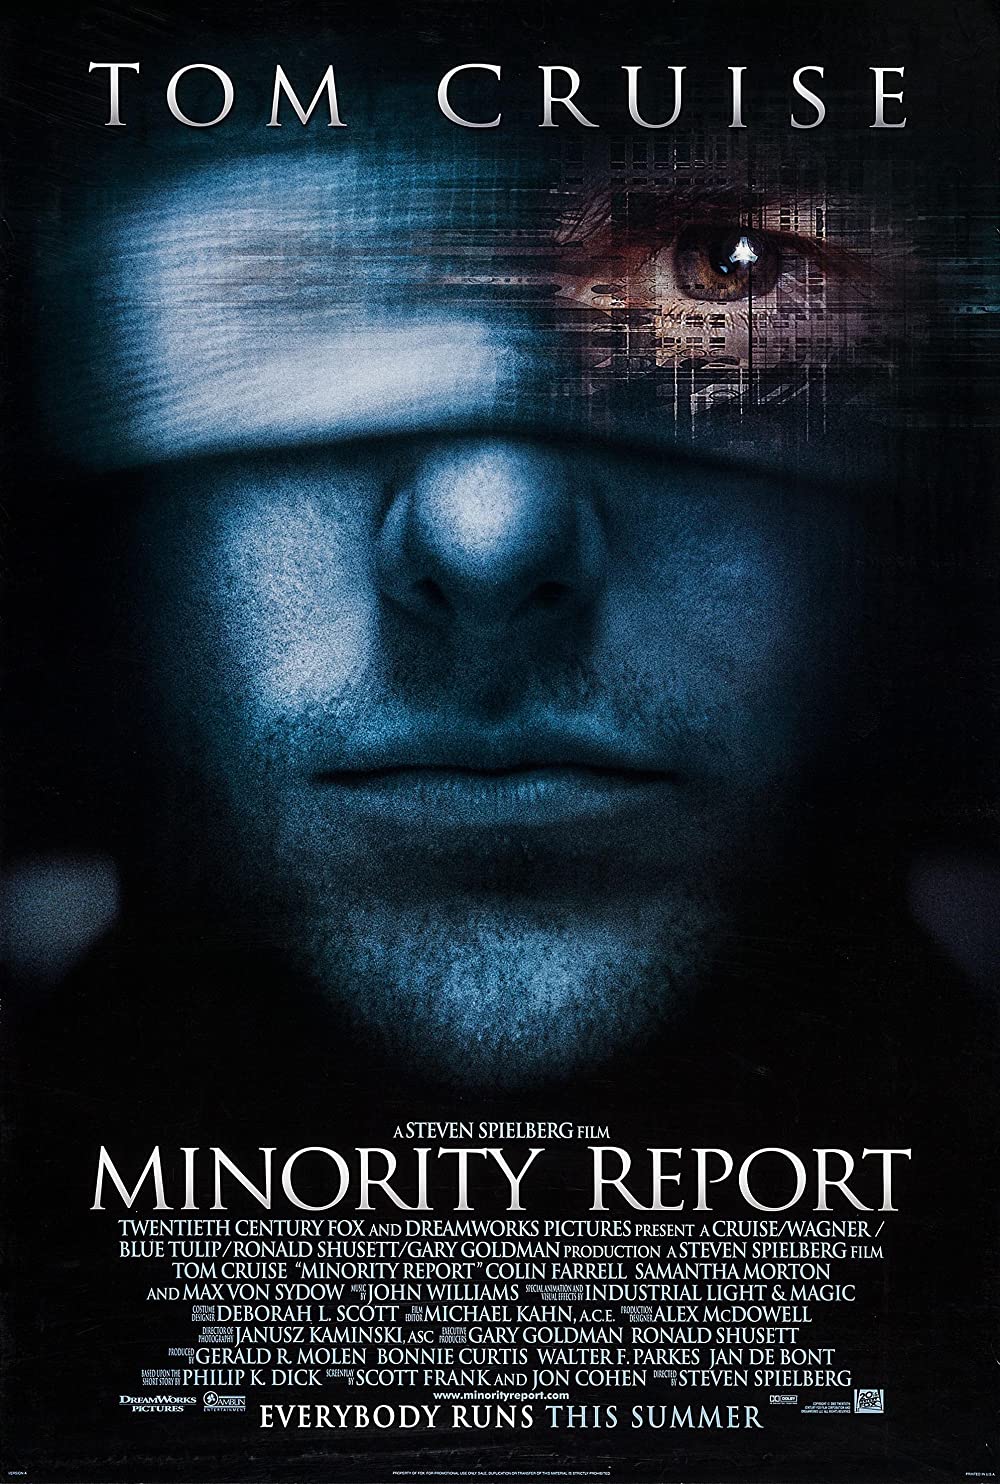 Filmbeschreibung zu Minority Report